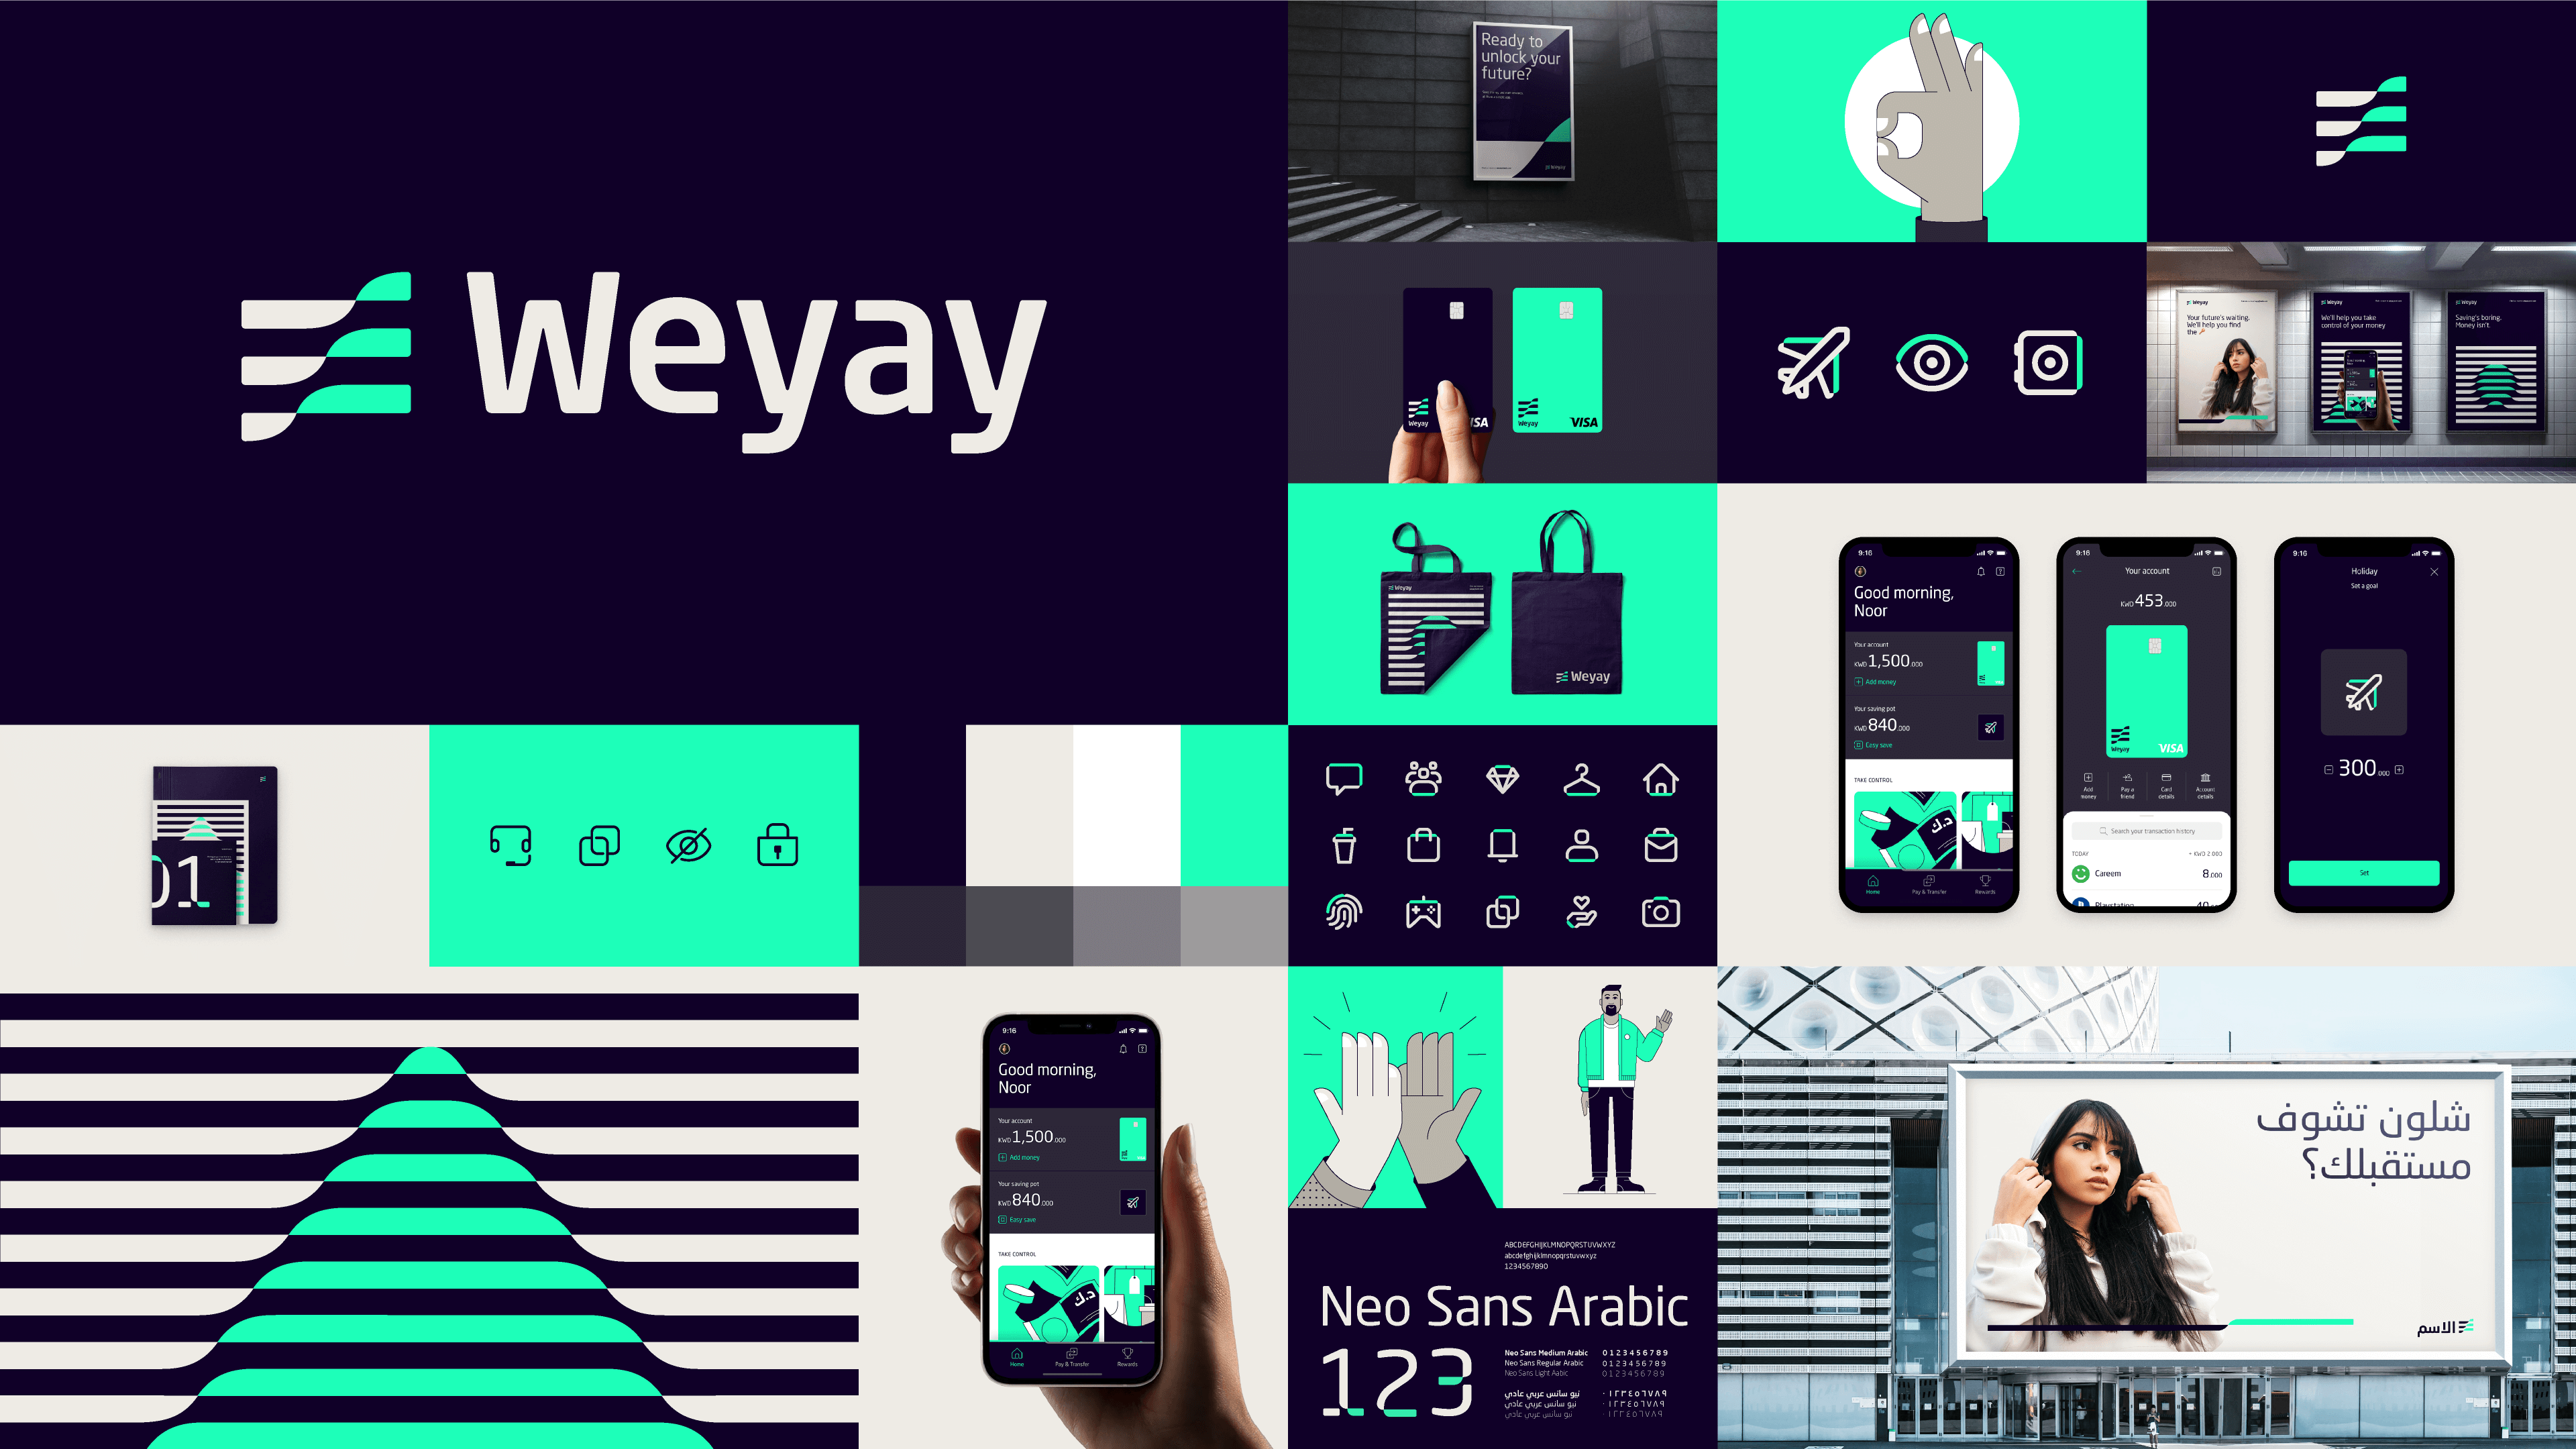 NBK_Weyay-social_screen_3